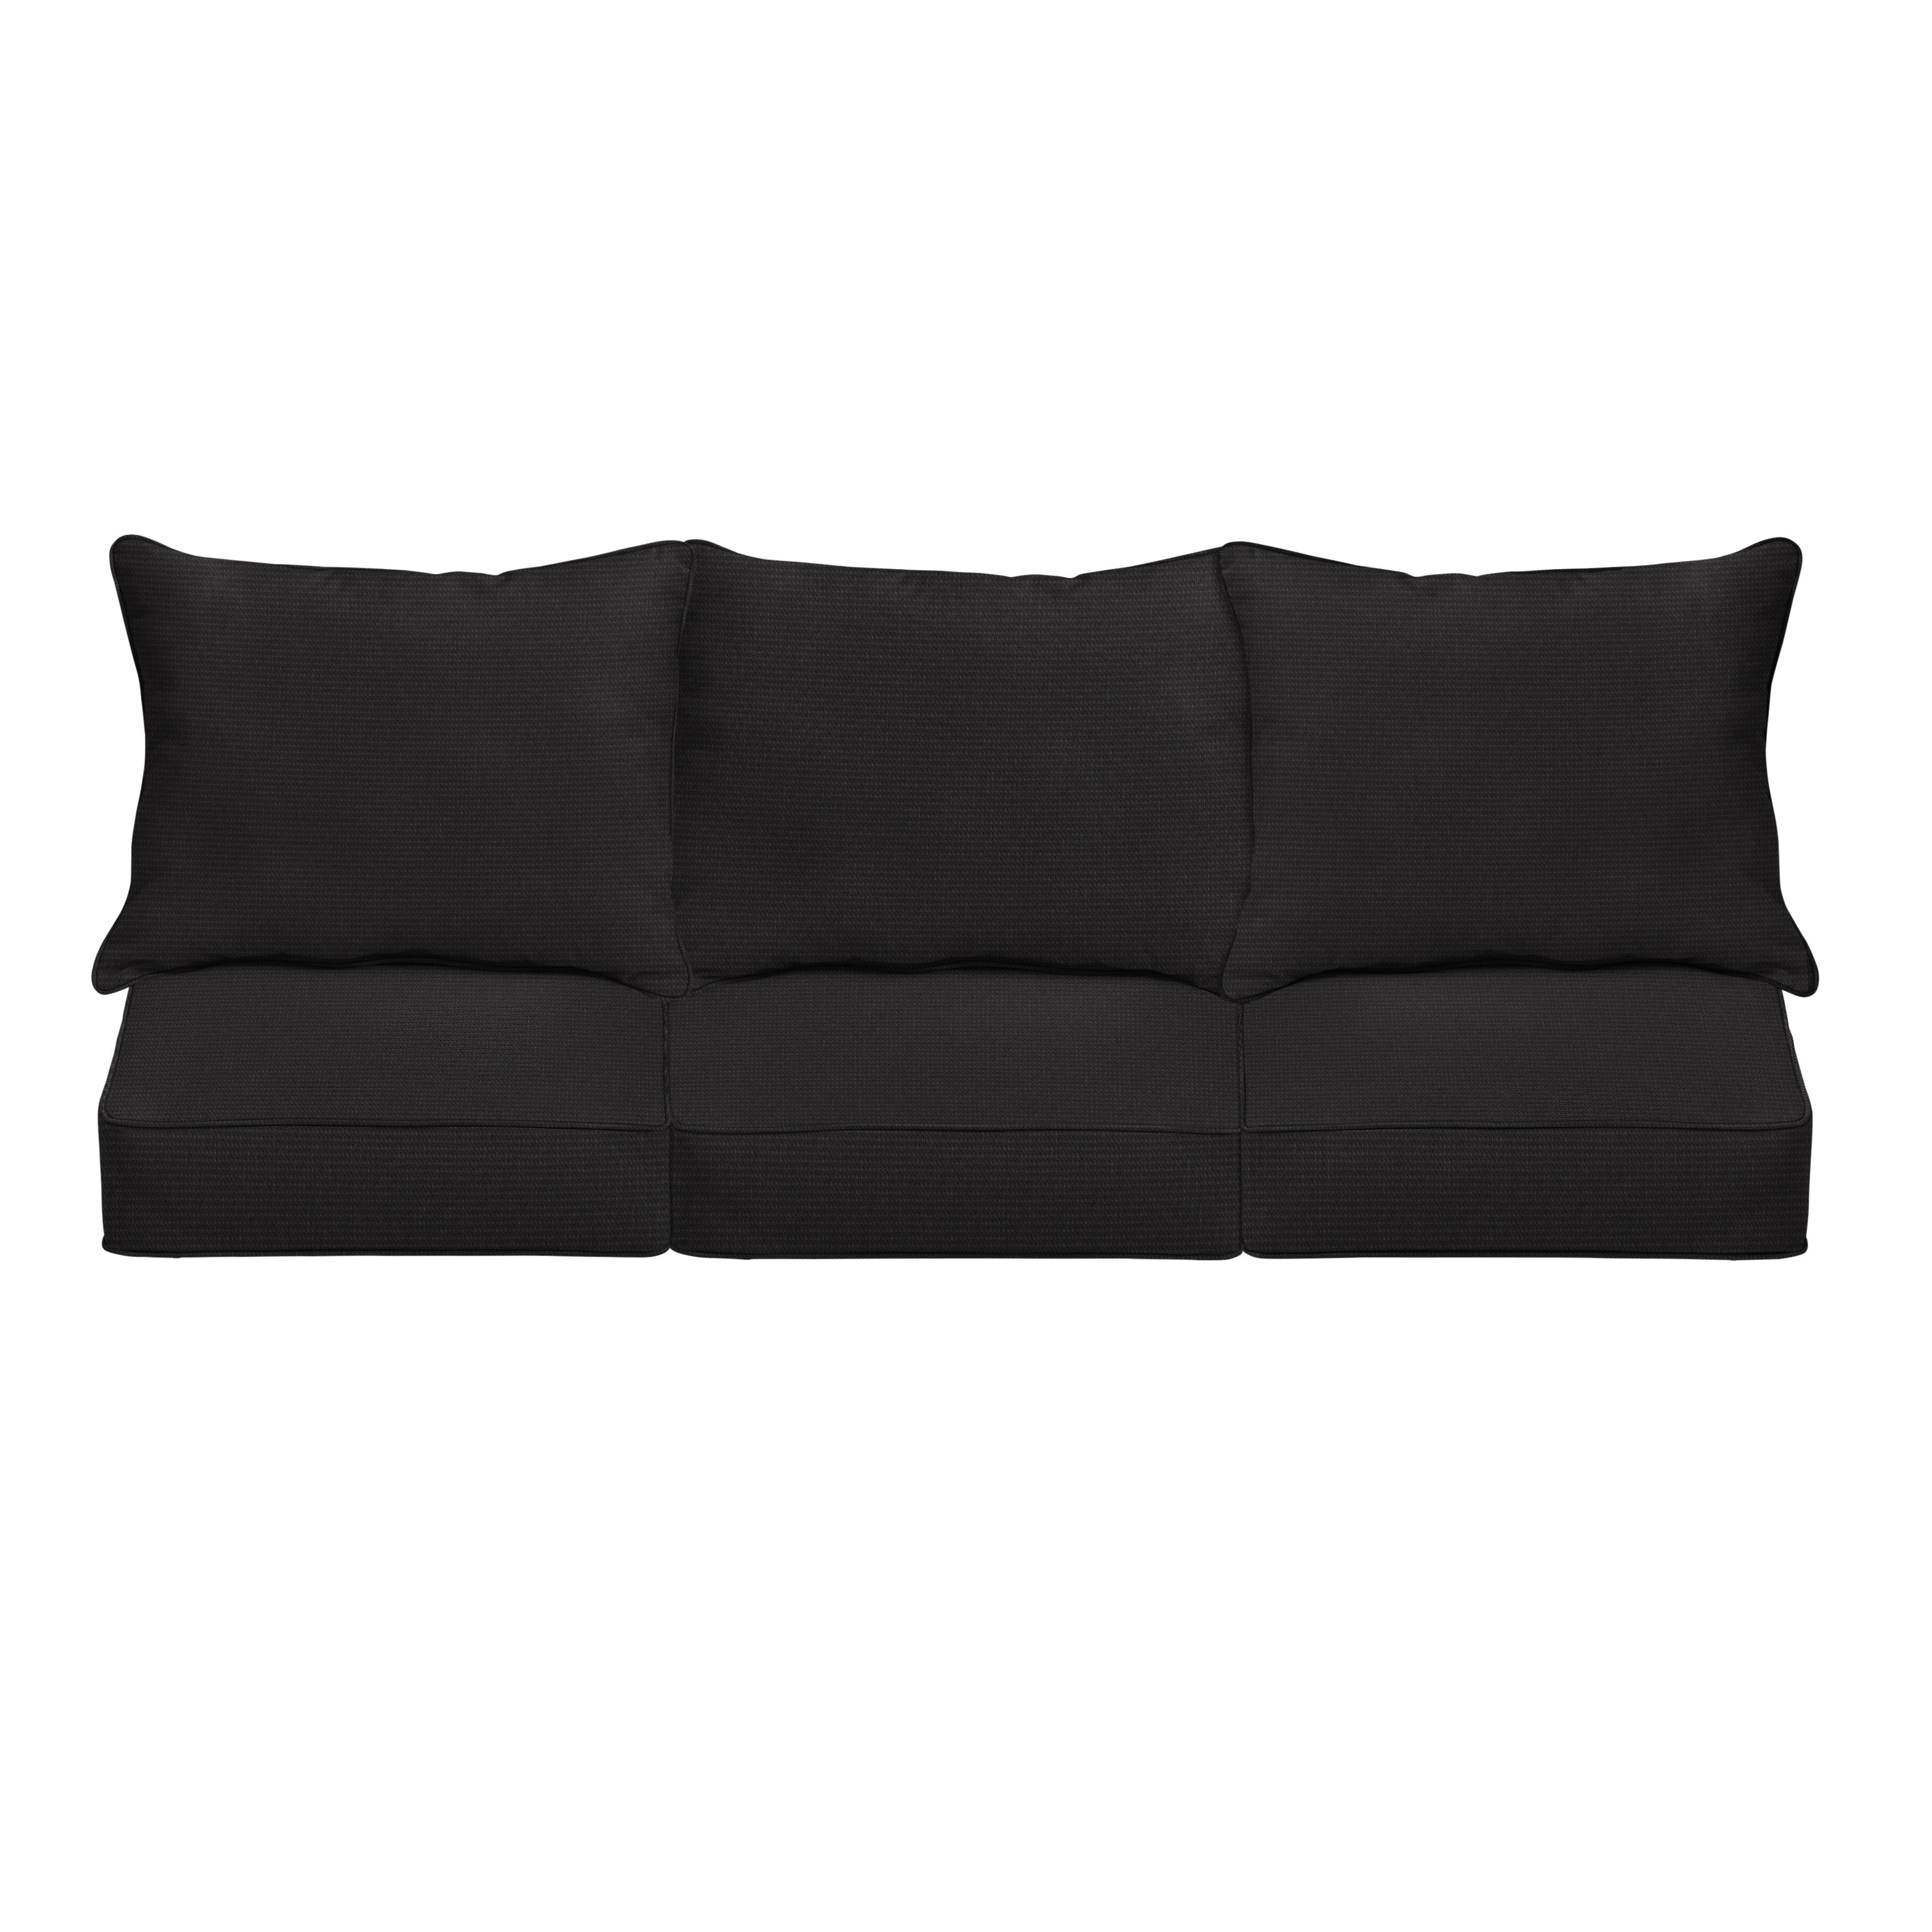 Outdura Rectangle Outdoor Deep Seating Sofa Pillow and Cushion Set